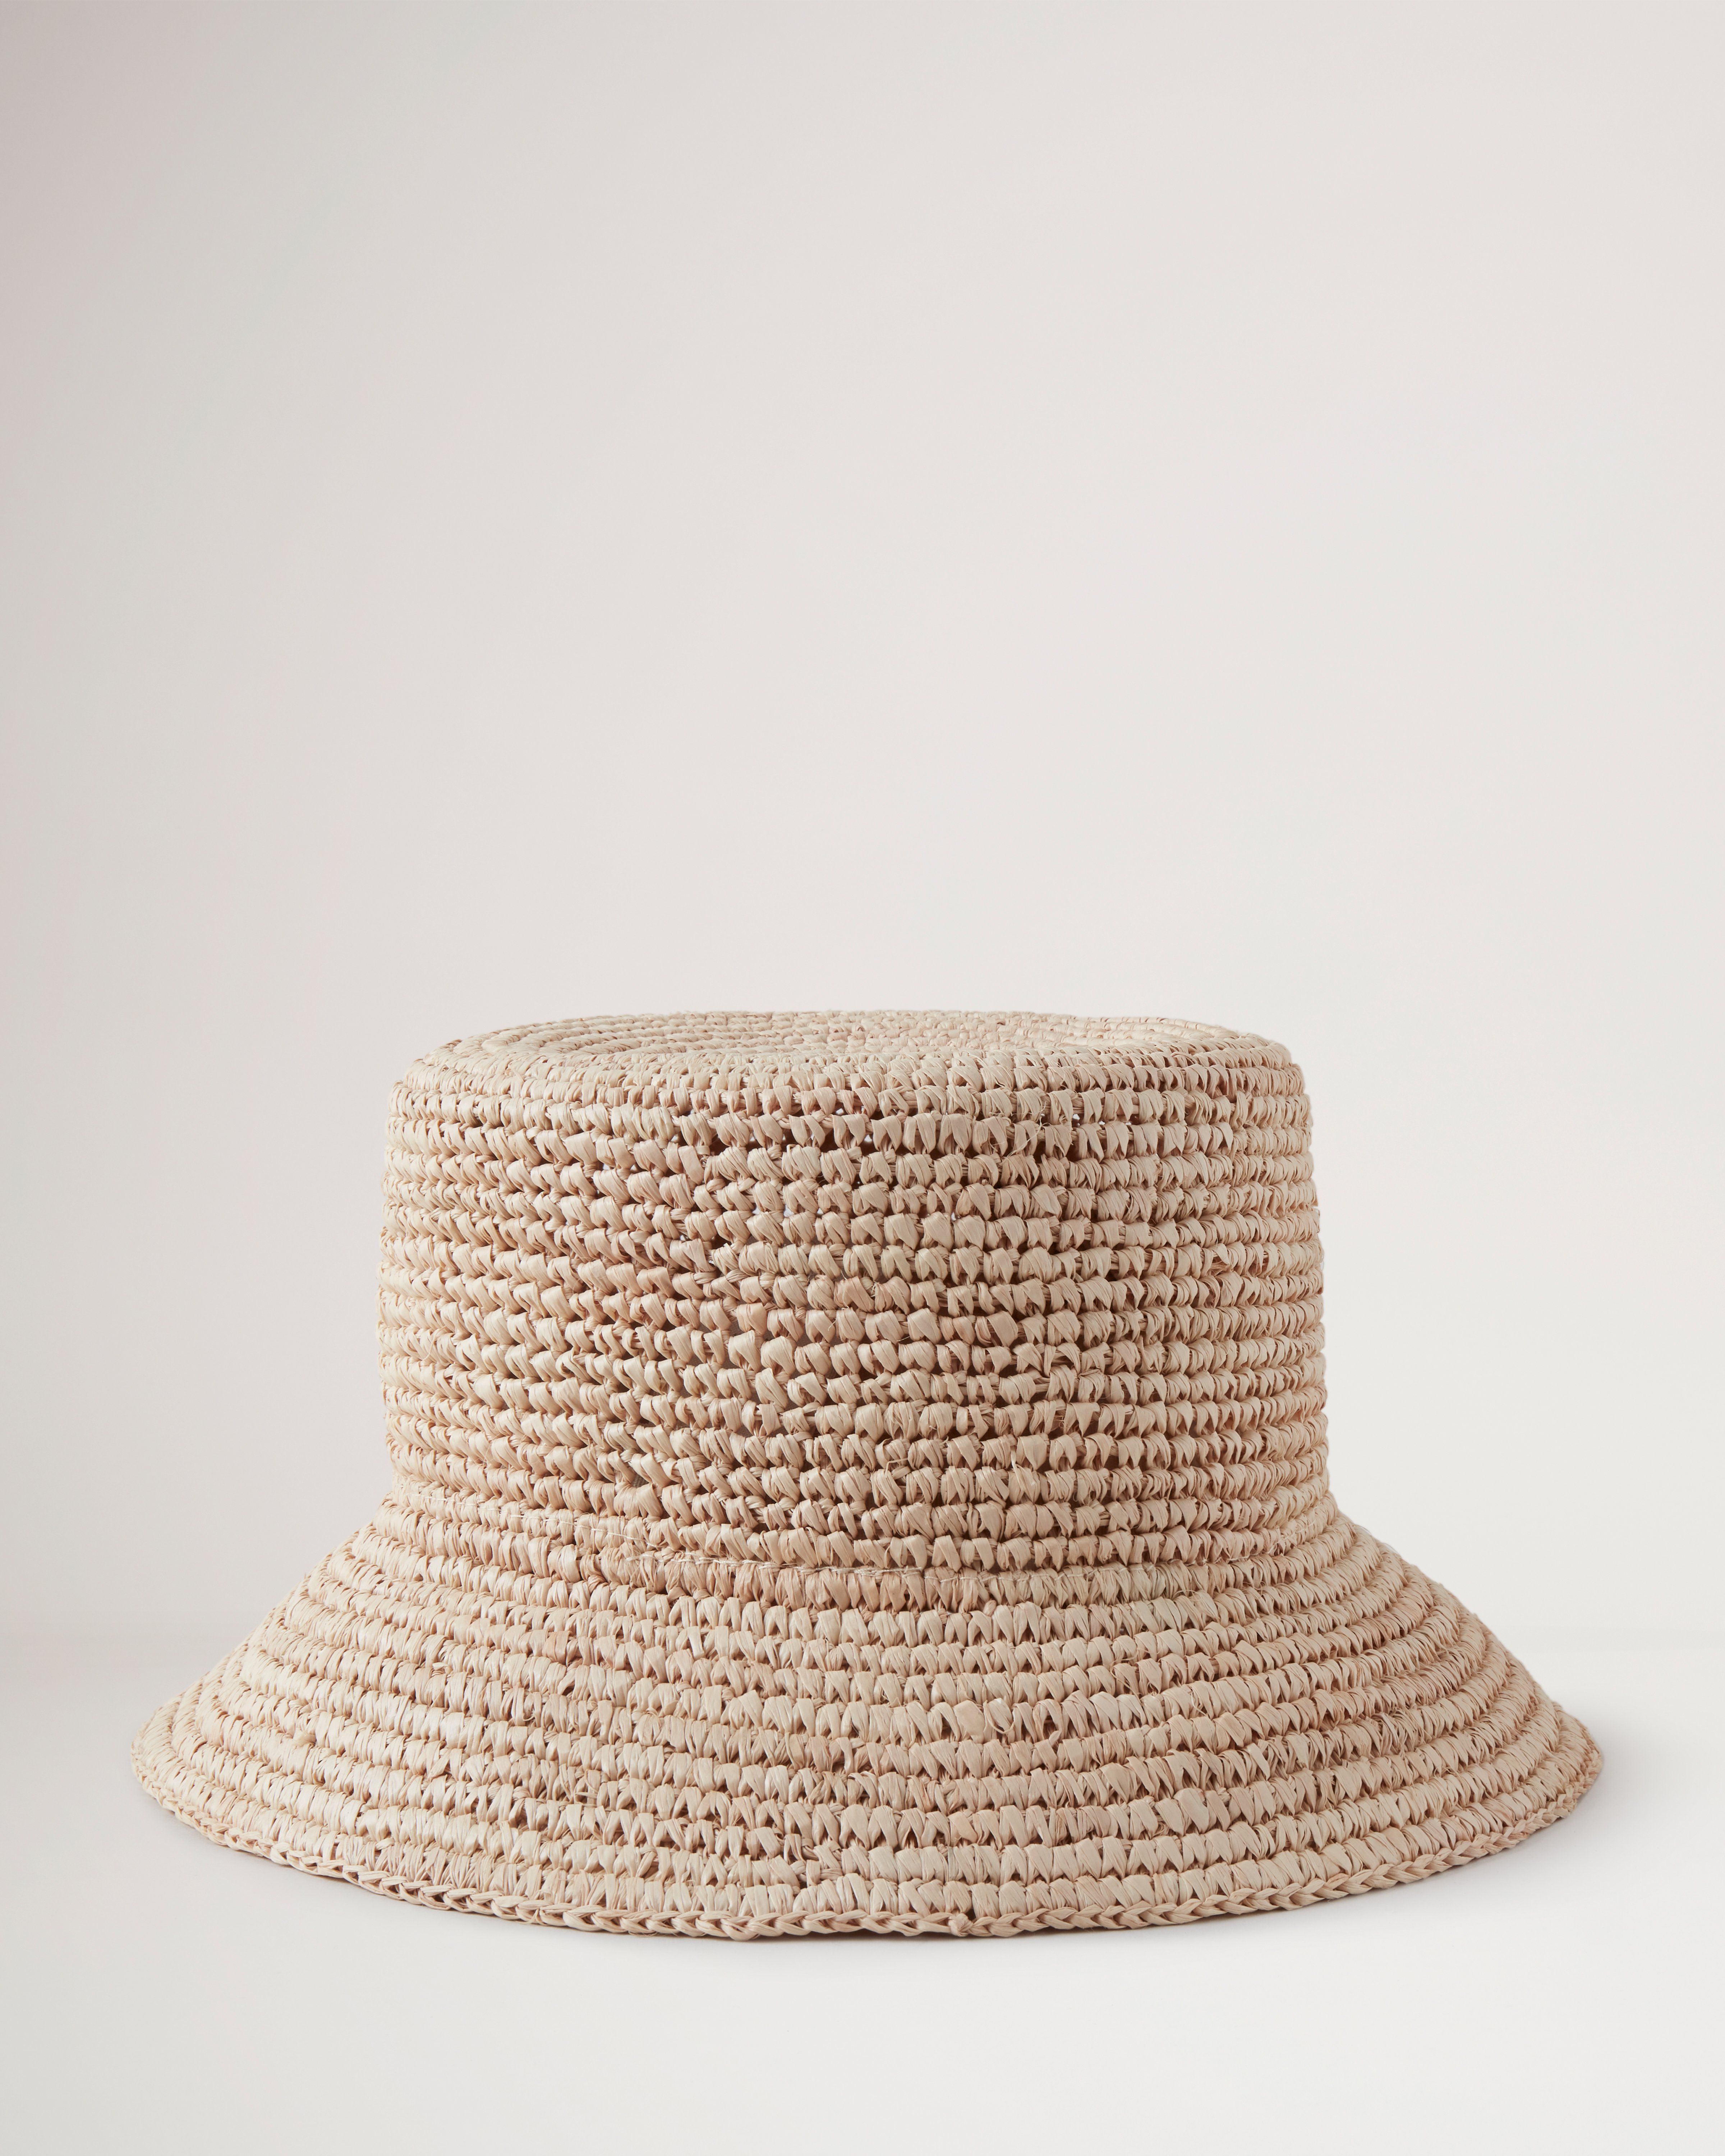 Mulberry Stripe Summer Bucket Hat - Maple-Pale Grey - Size M-L